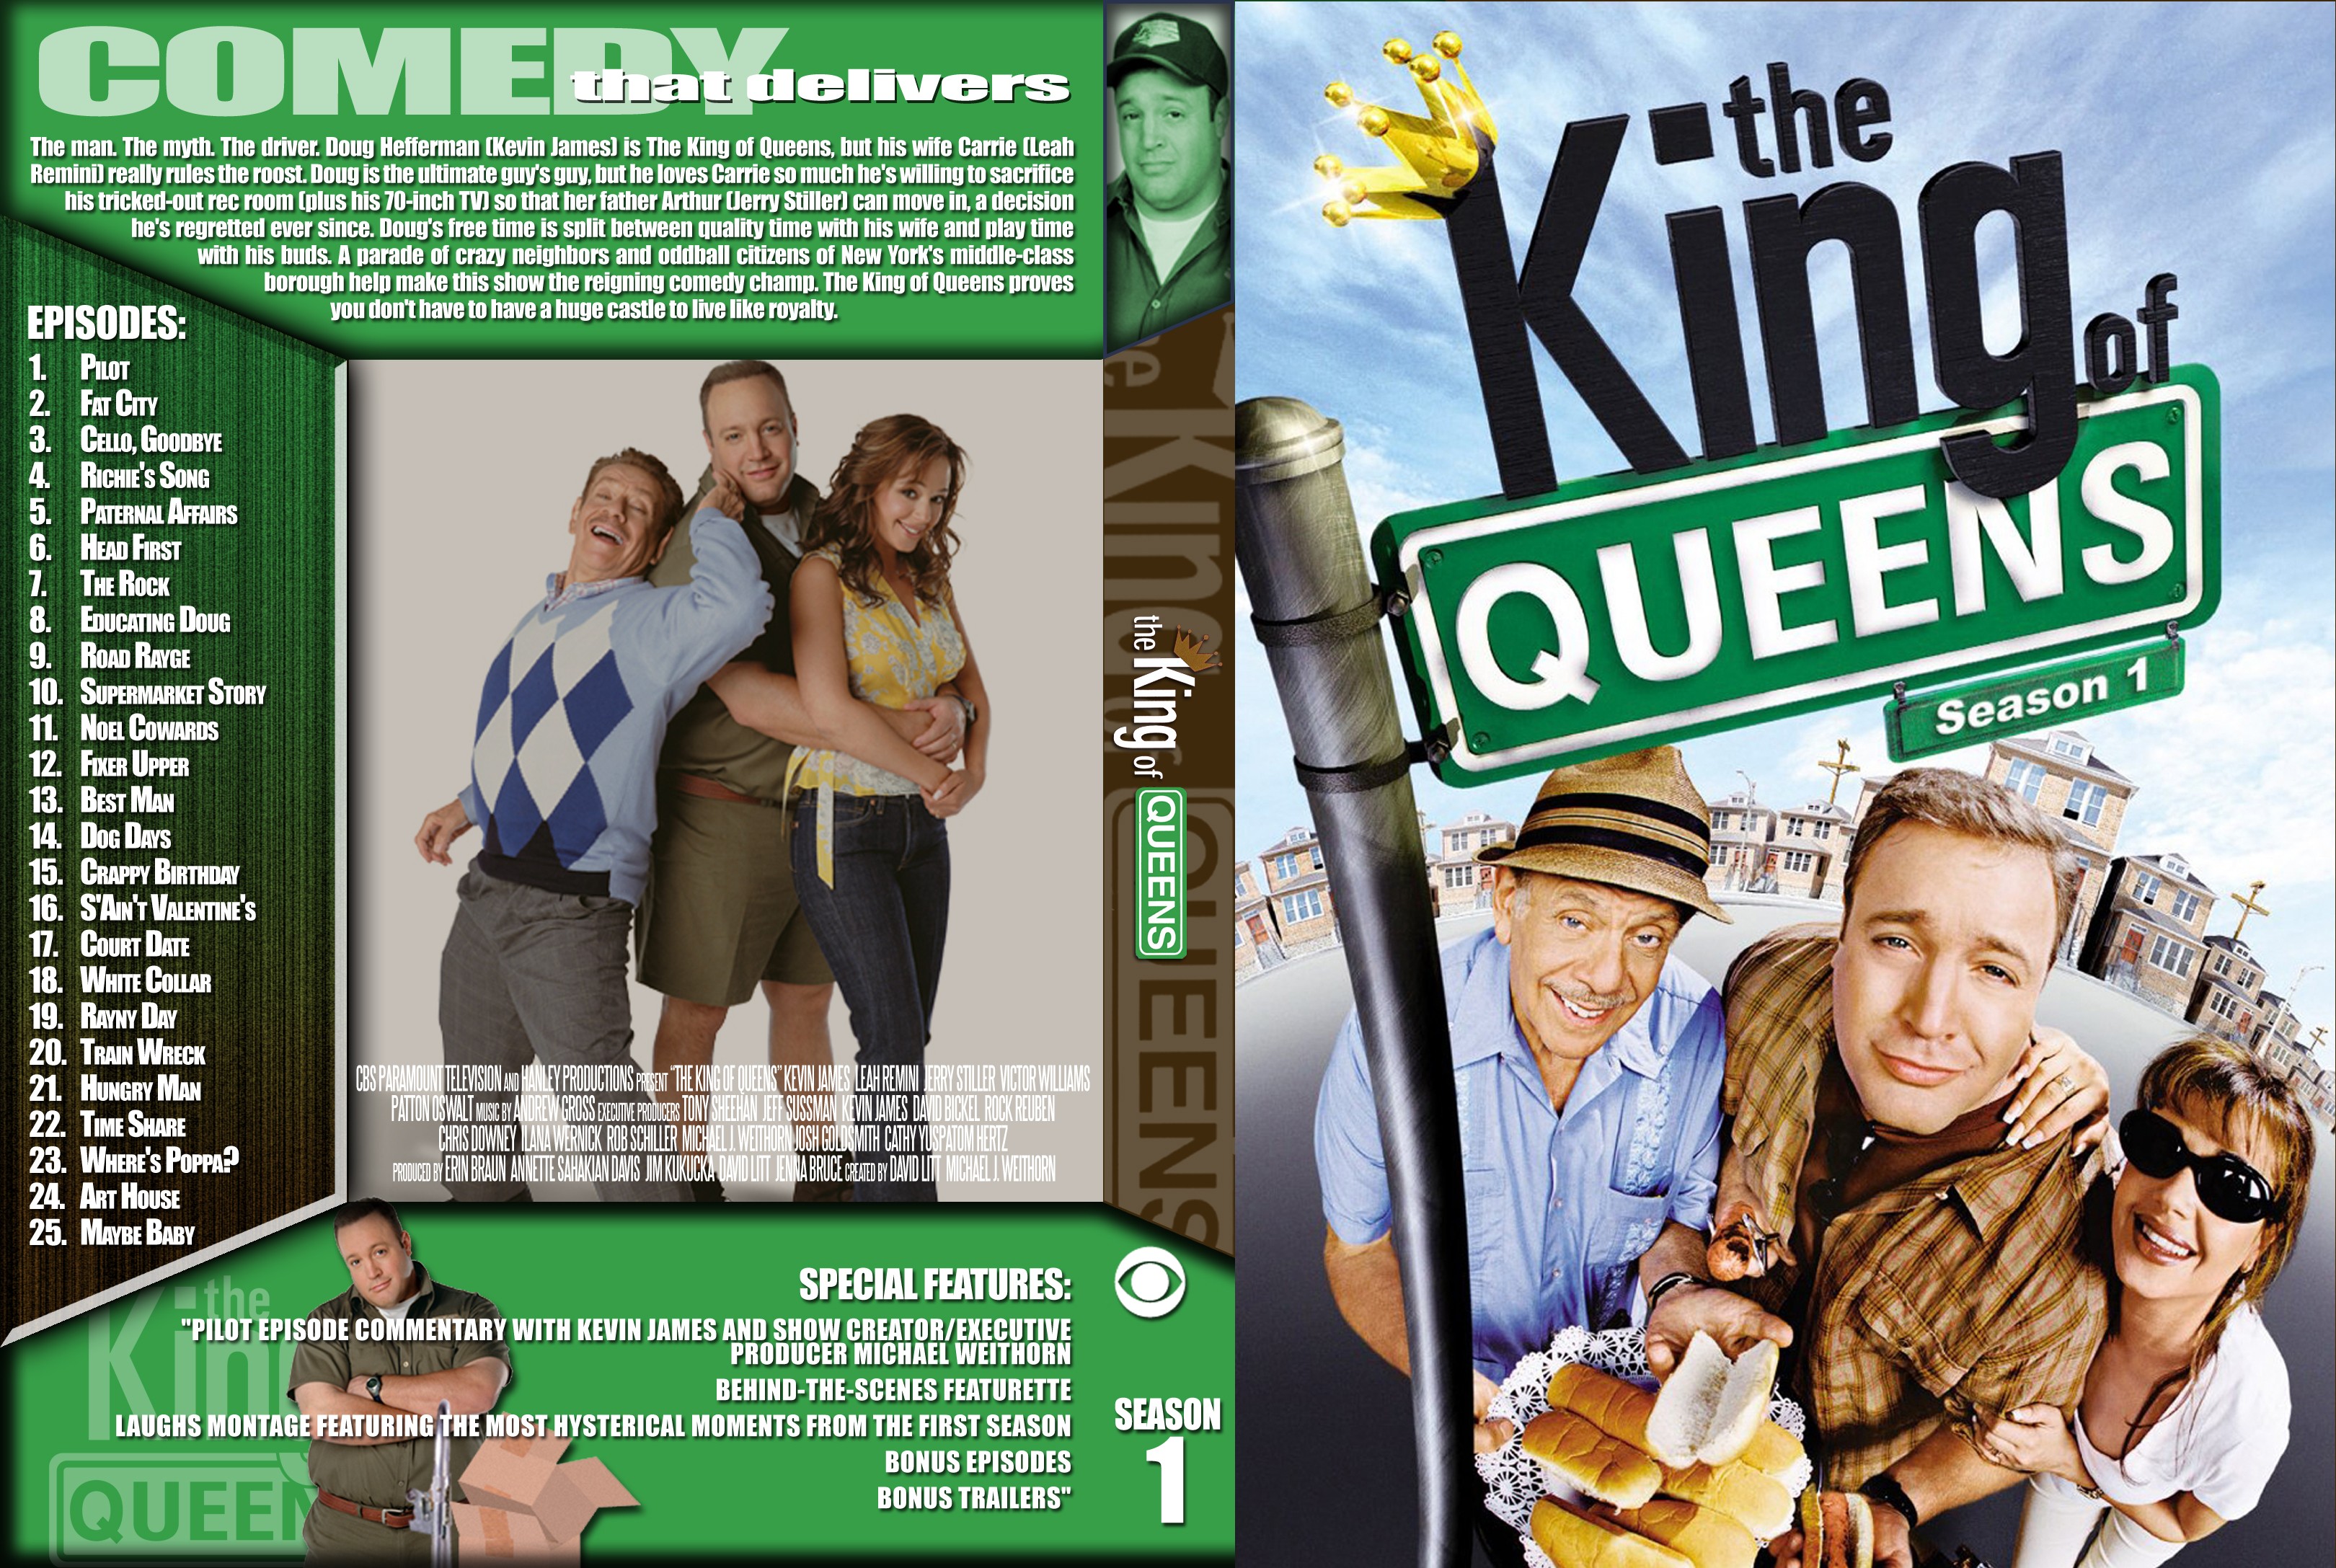 The King of Queens - Season 9 DVD-Box DVD